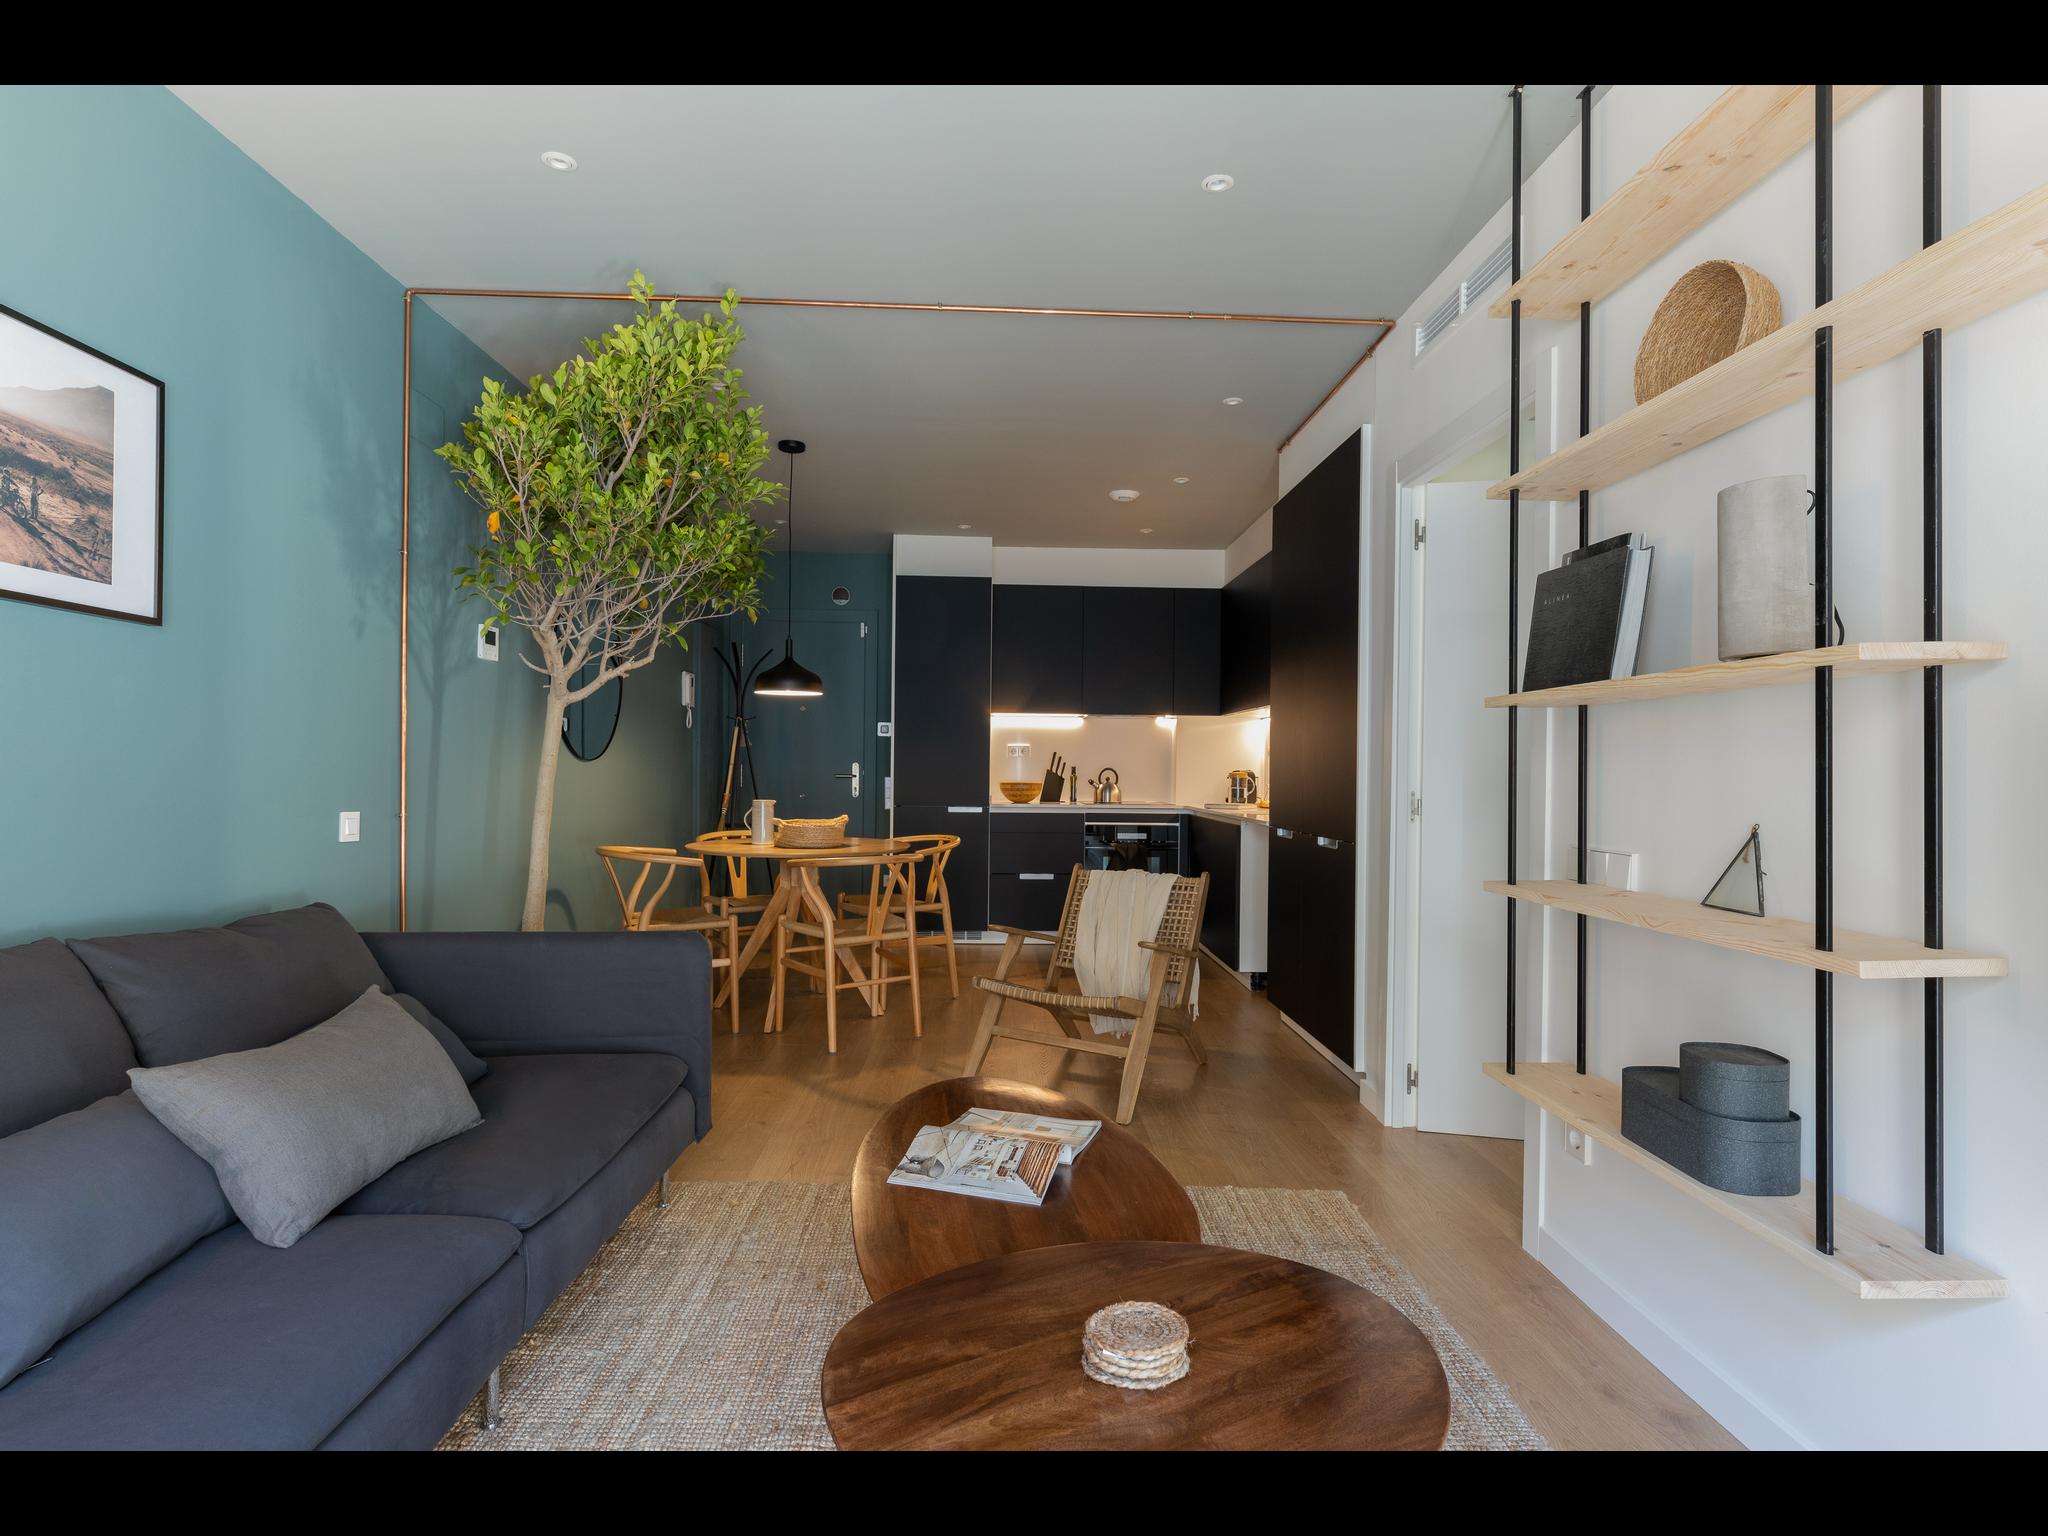 Sicilia 2 - Apartment for rent in Barcelona